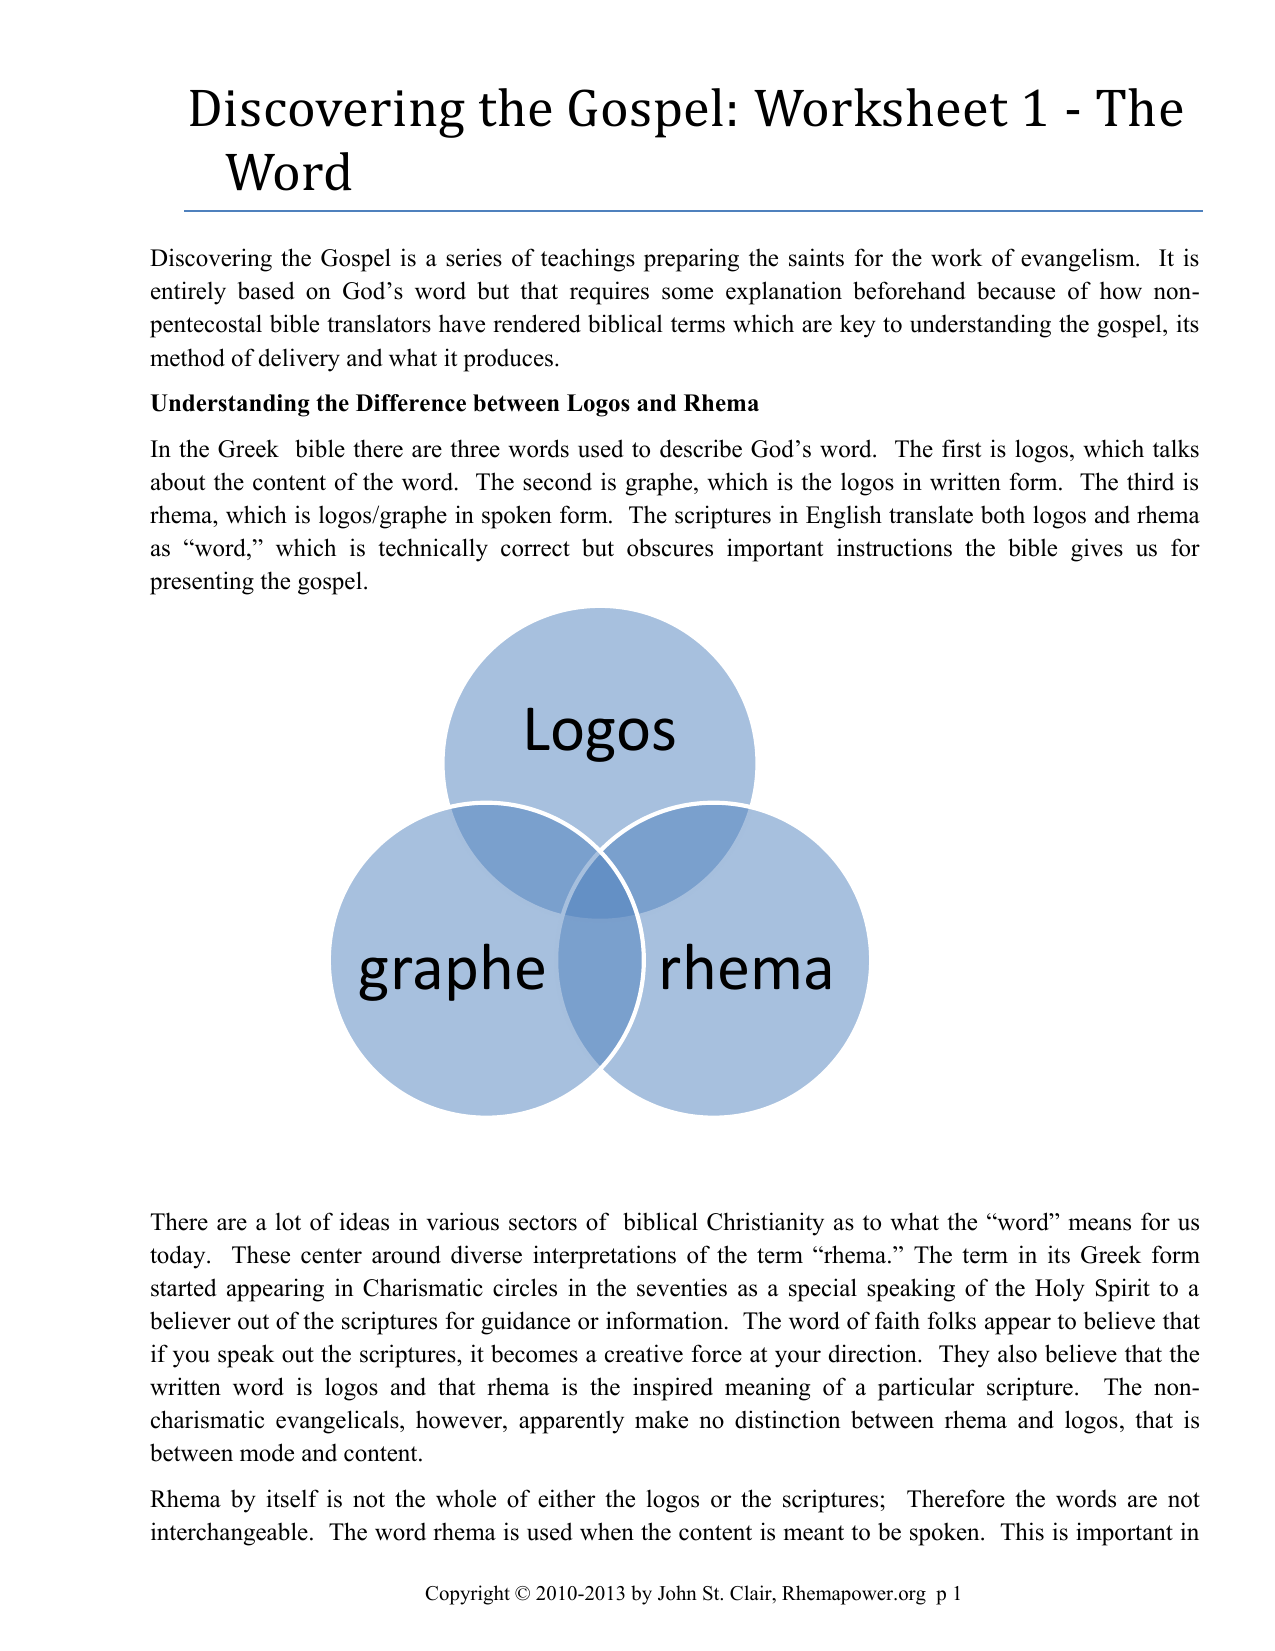 rhema word and logos word